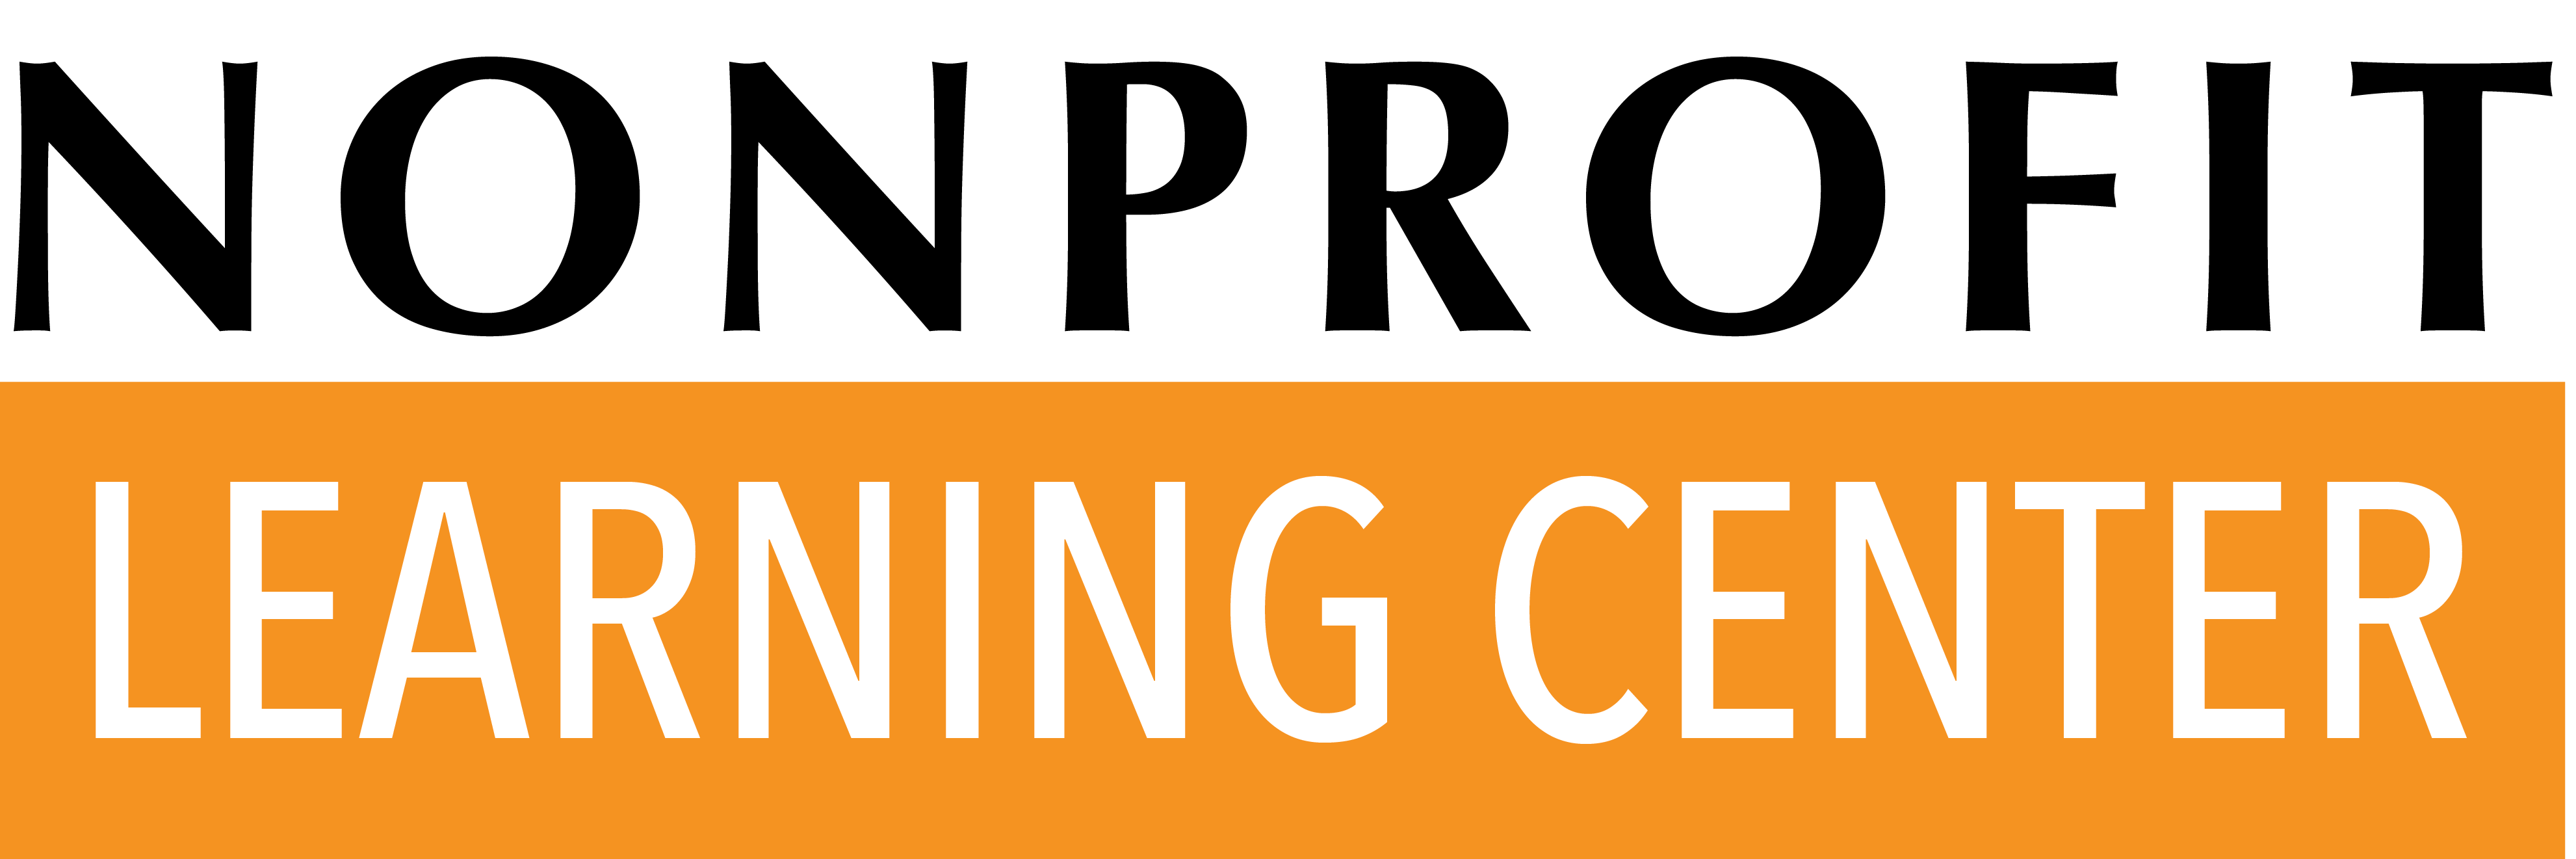 Nonprofit Learning Center logo